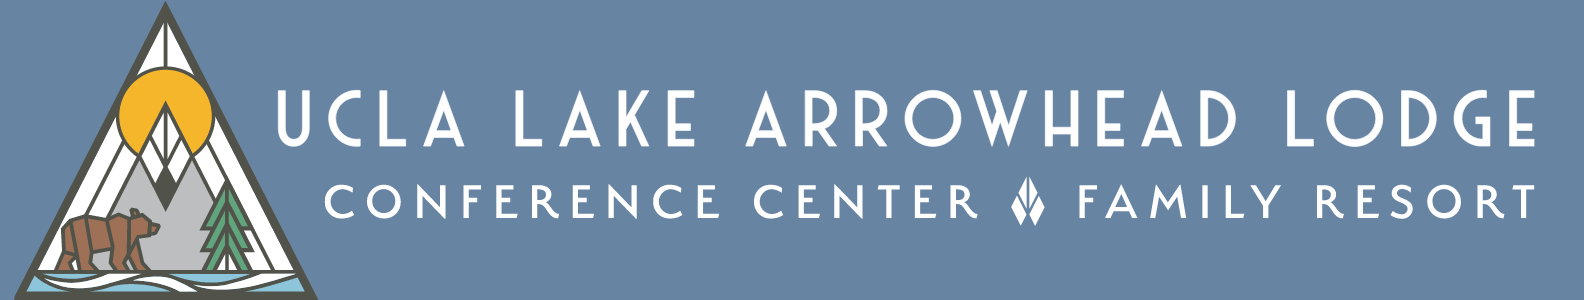 UCLA Lake Arrowhead Lodge Logo 